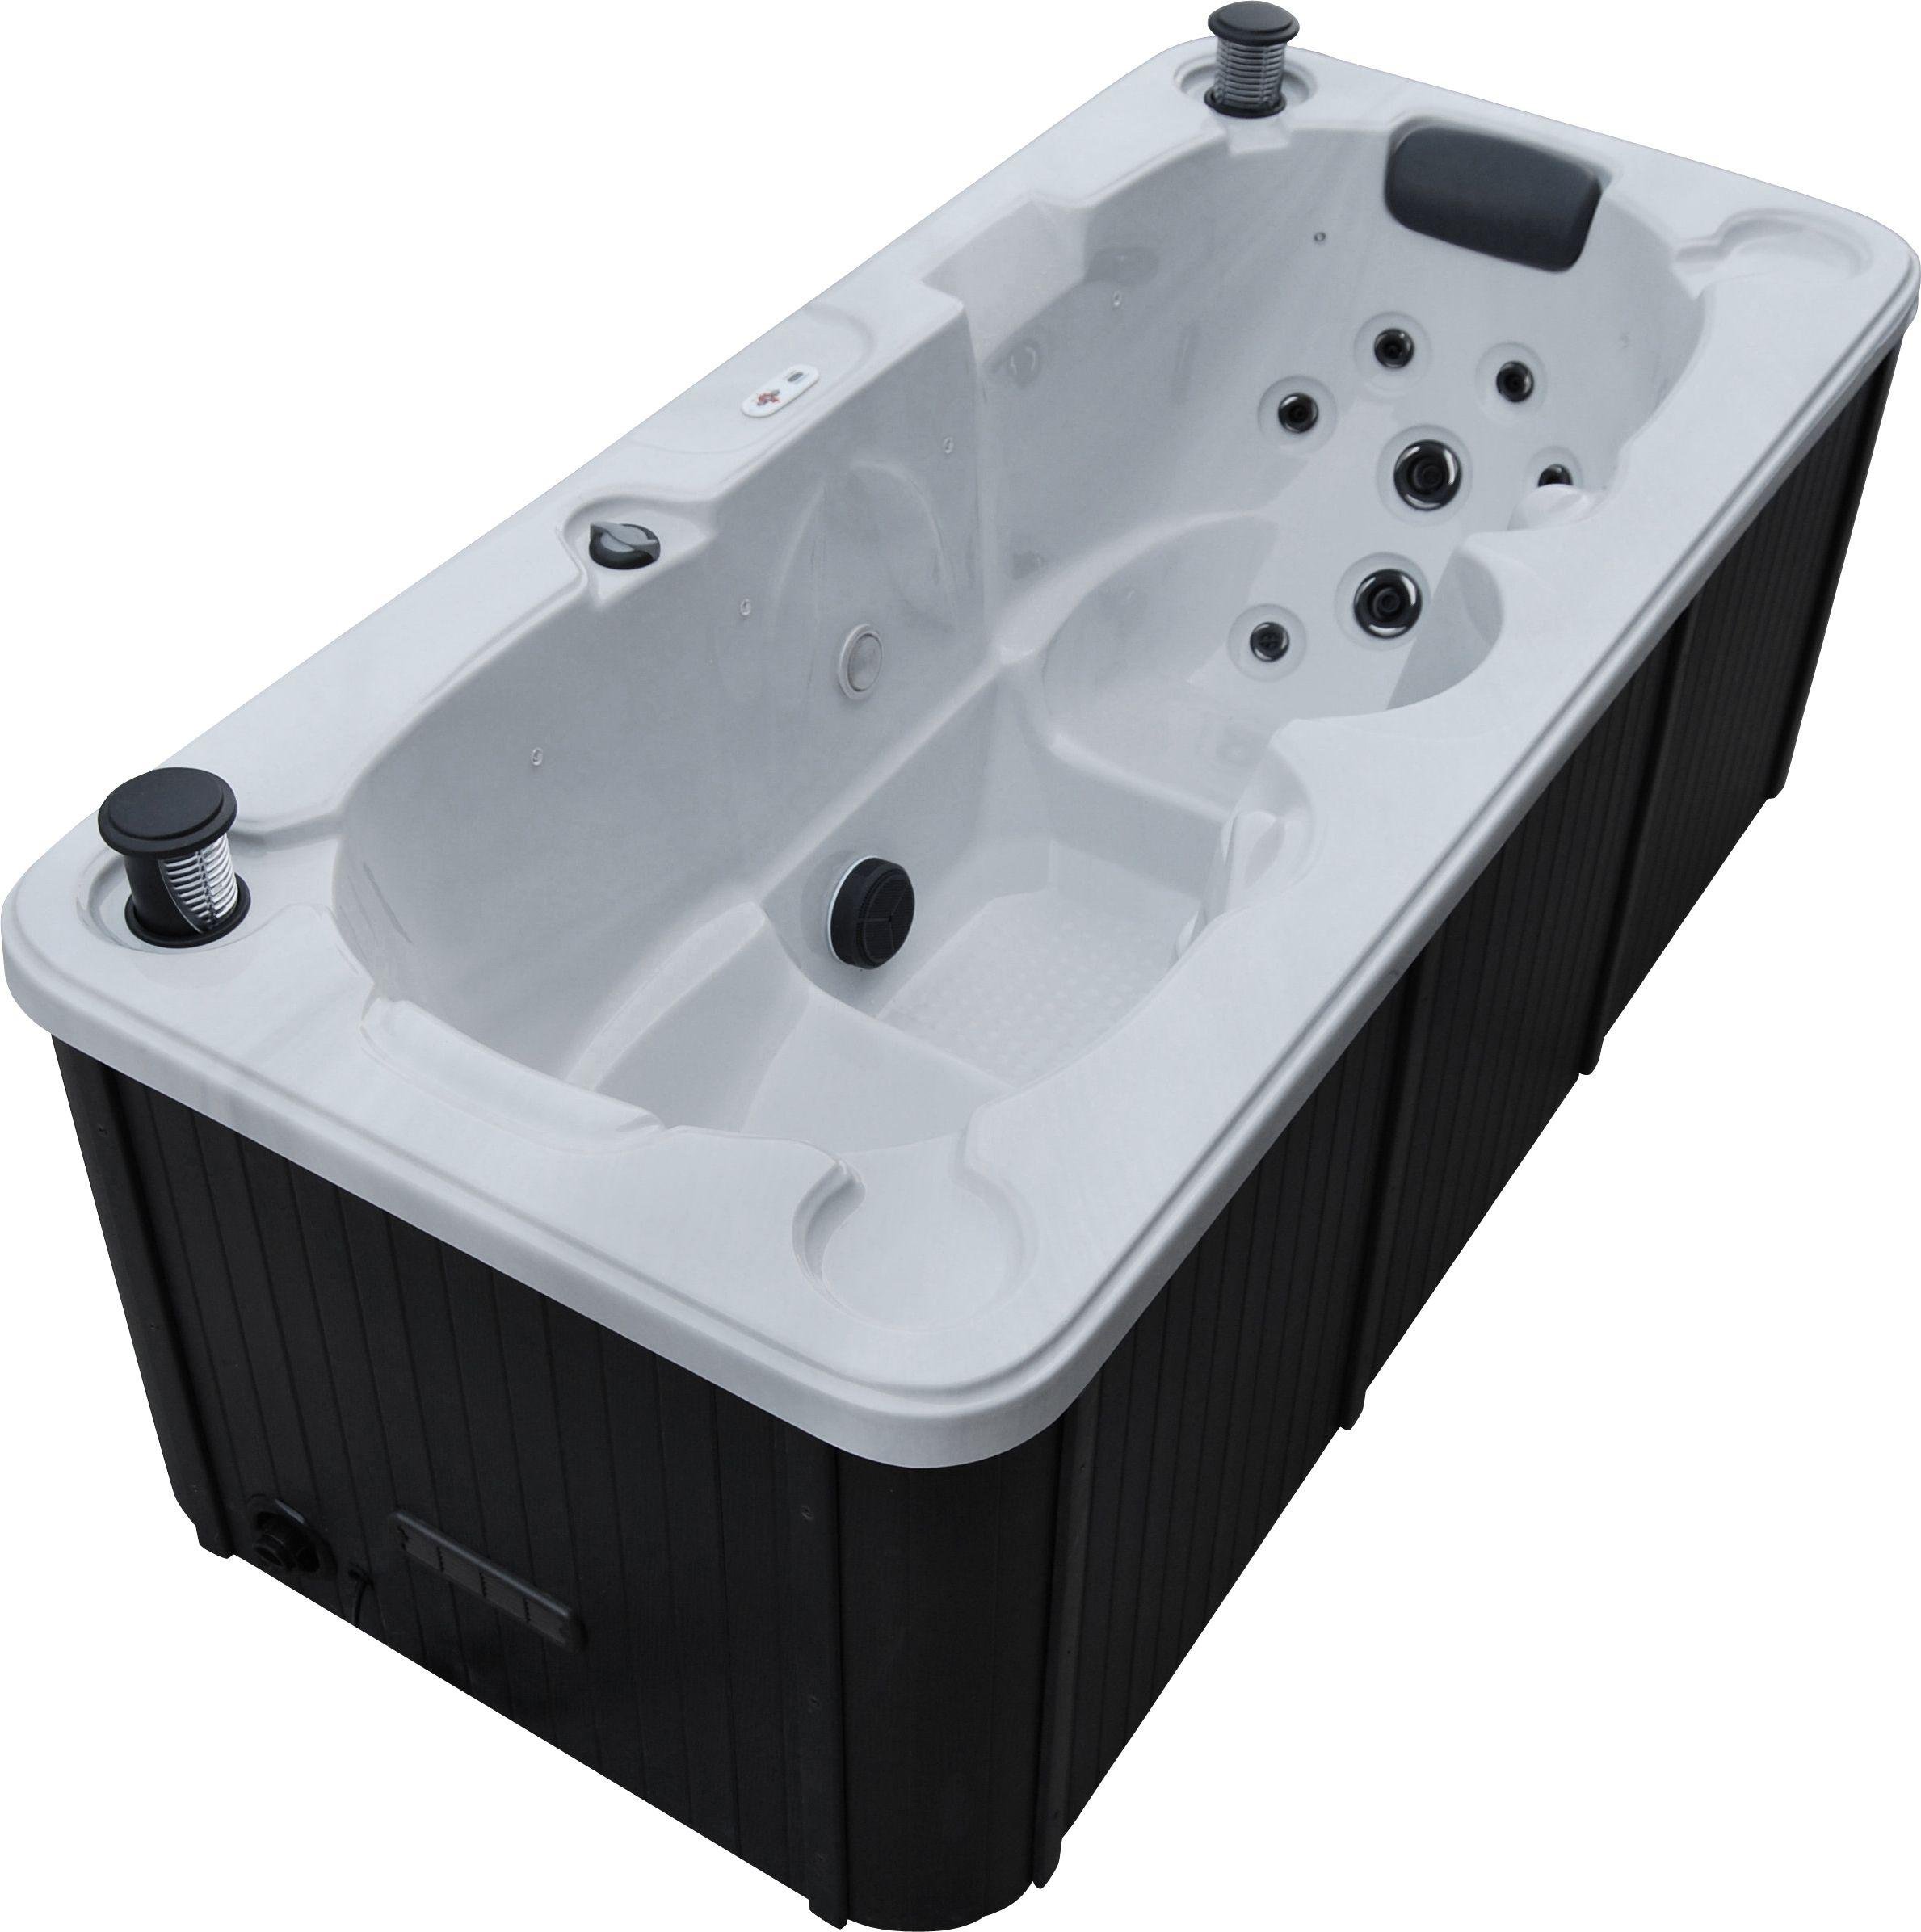 Canadian Spa Co. Yukon Plug & Play 2 Person Hot Tub. at Argos review